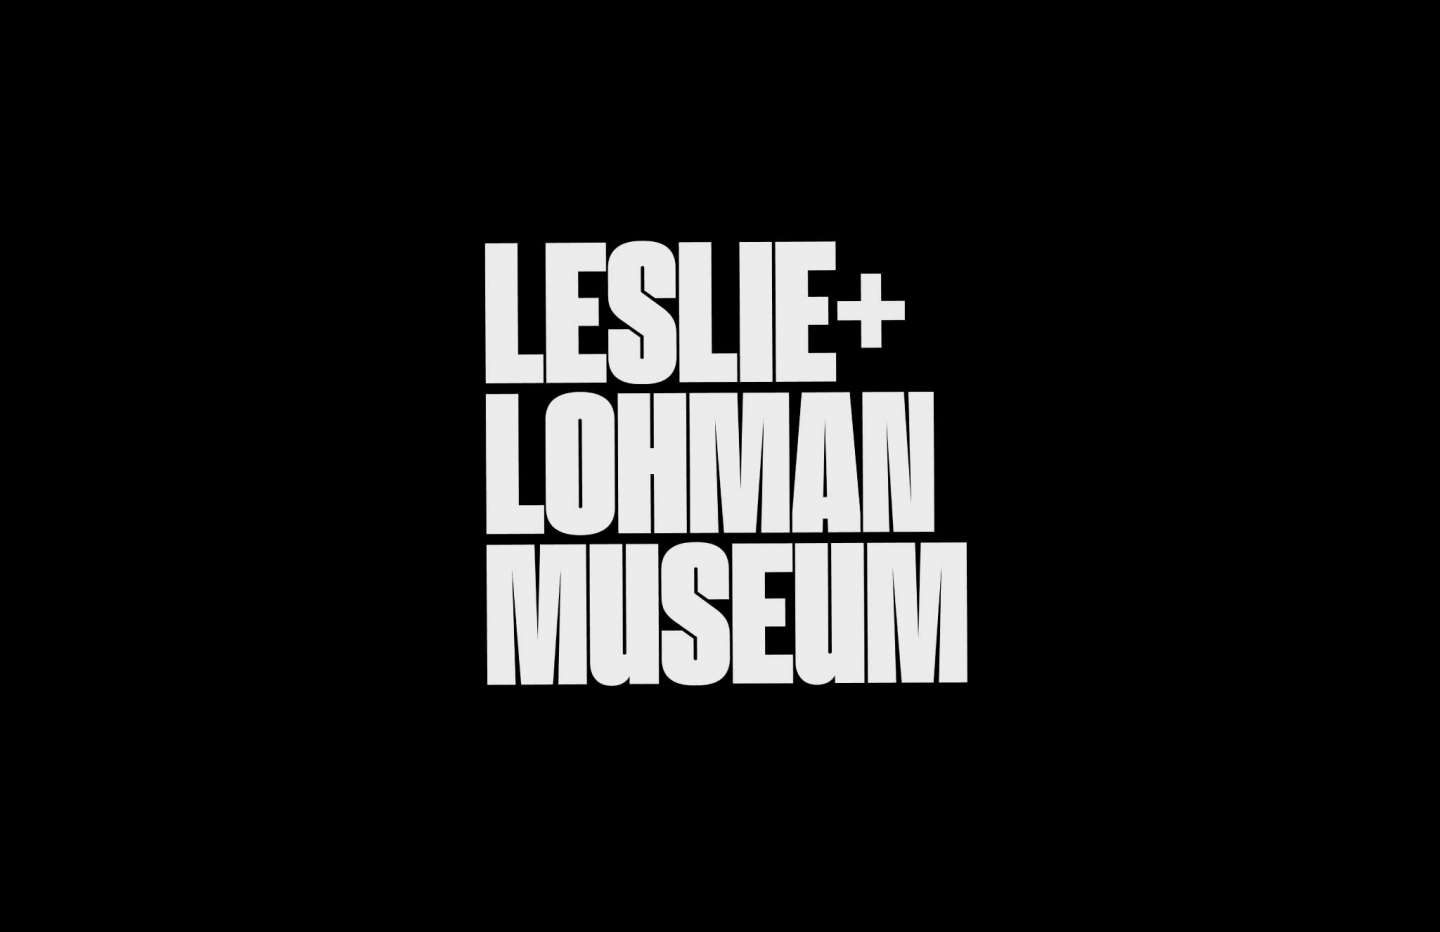 Leslie-Lohman Museum Identity 